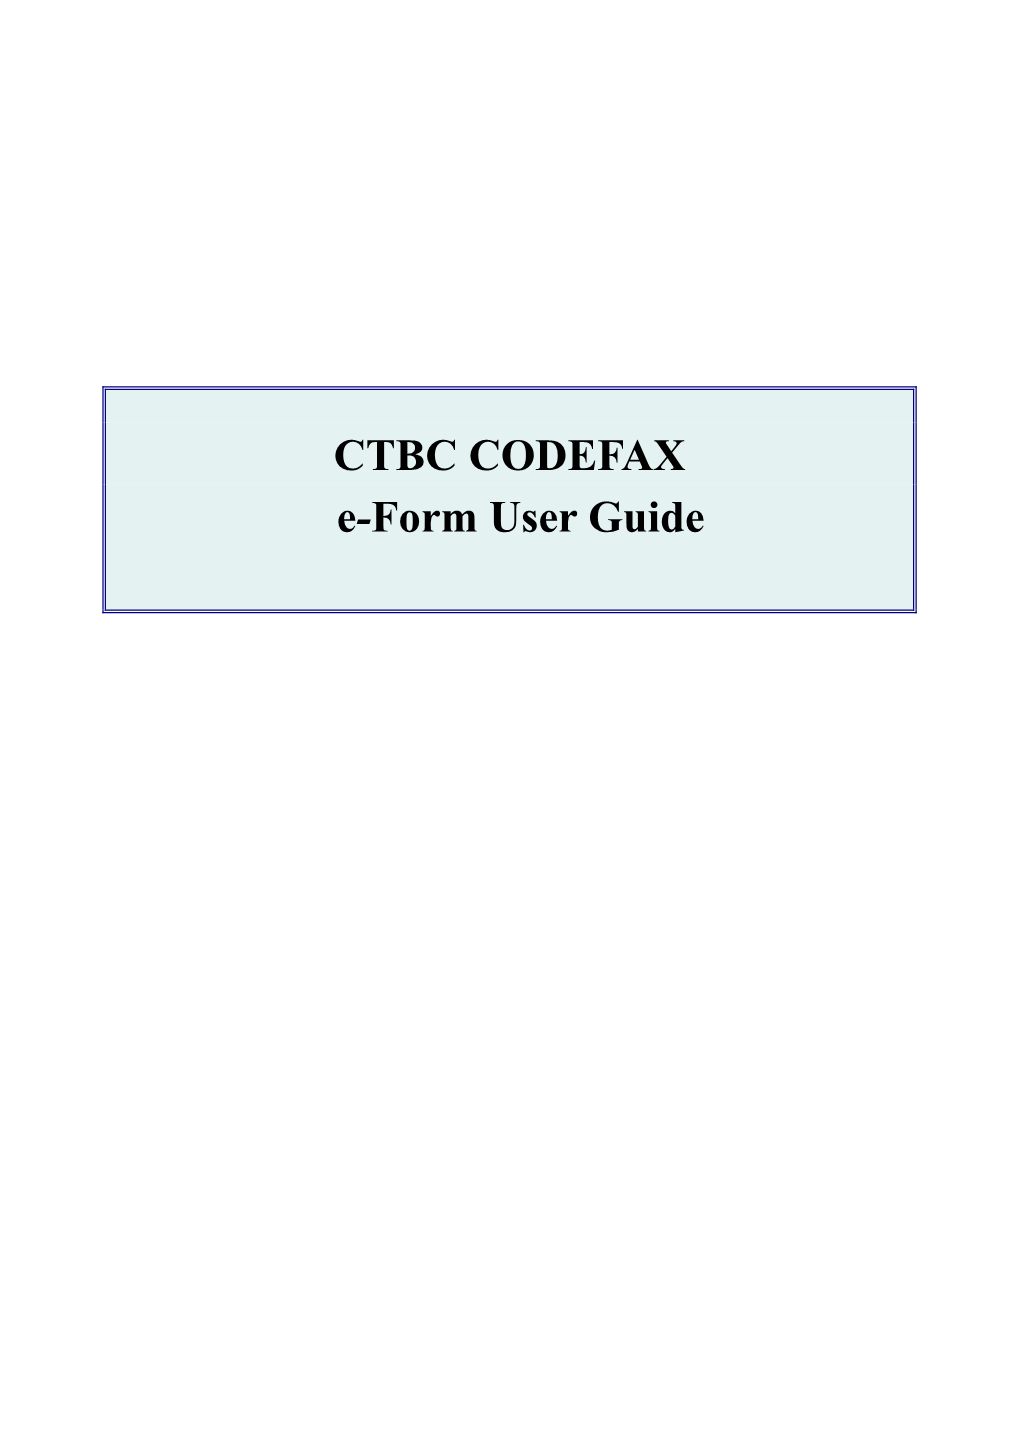 CTBC CODEFAX E-Form User Guide